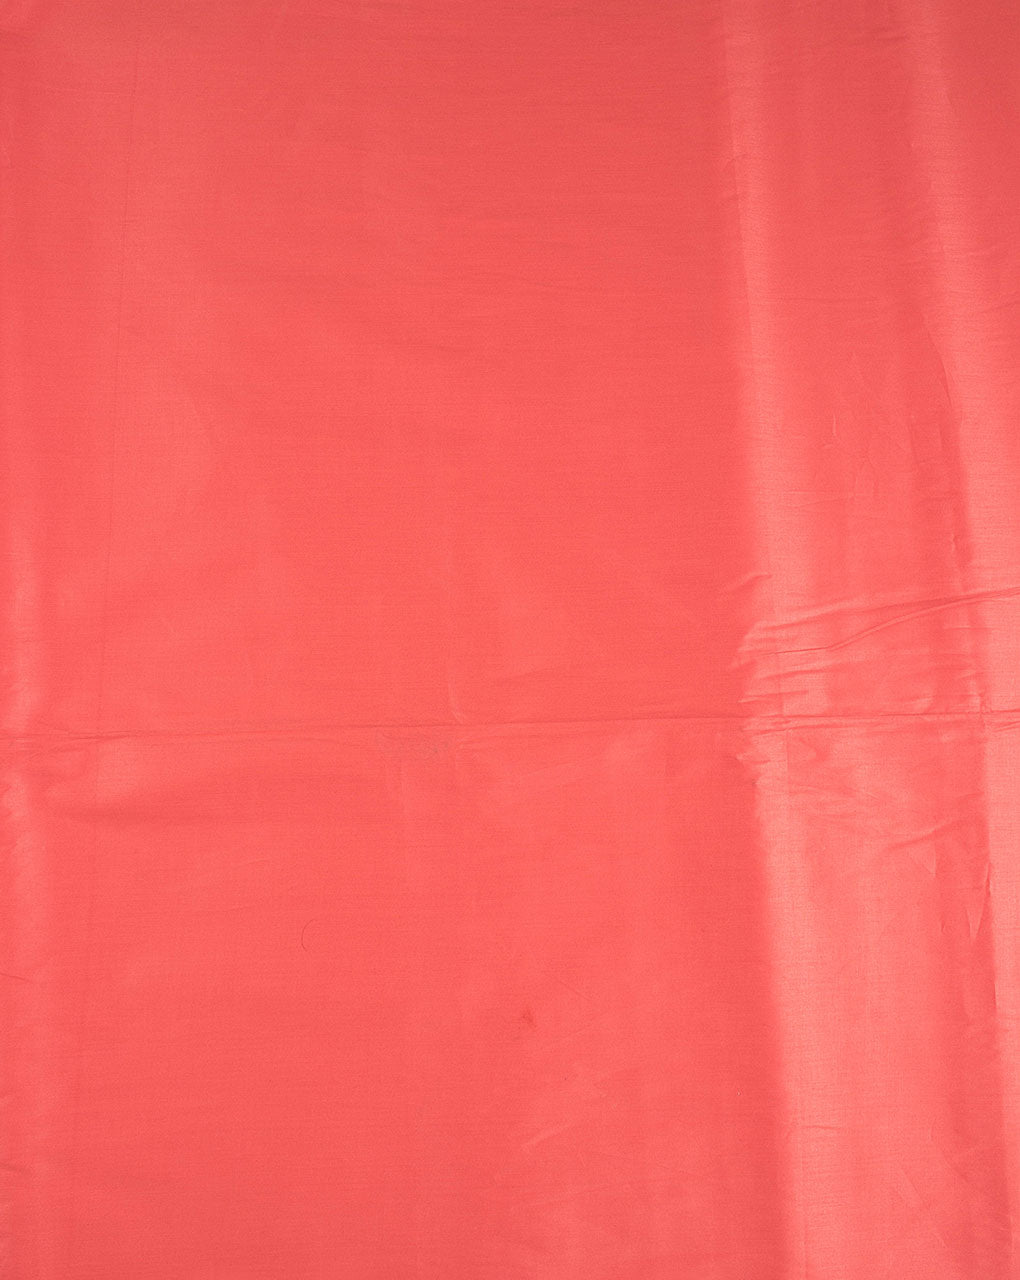 Desire Red Plain Glazed Cotton Fabric - Fabriclore.com